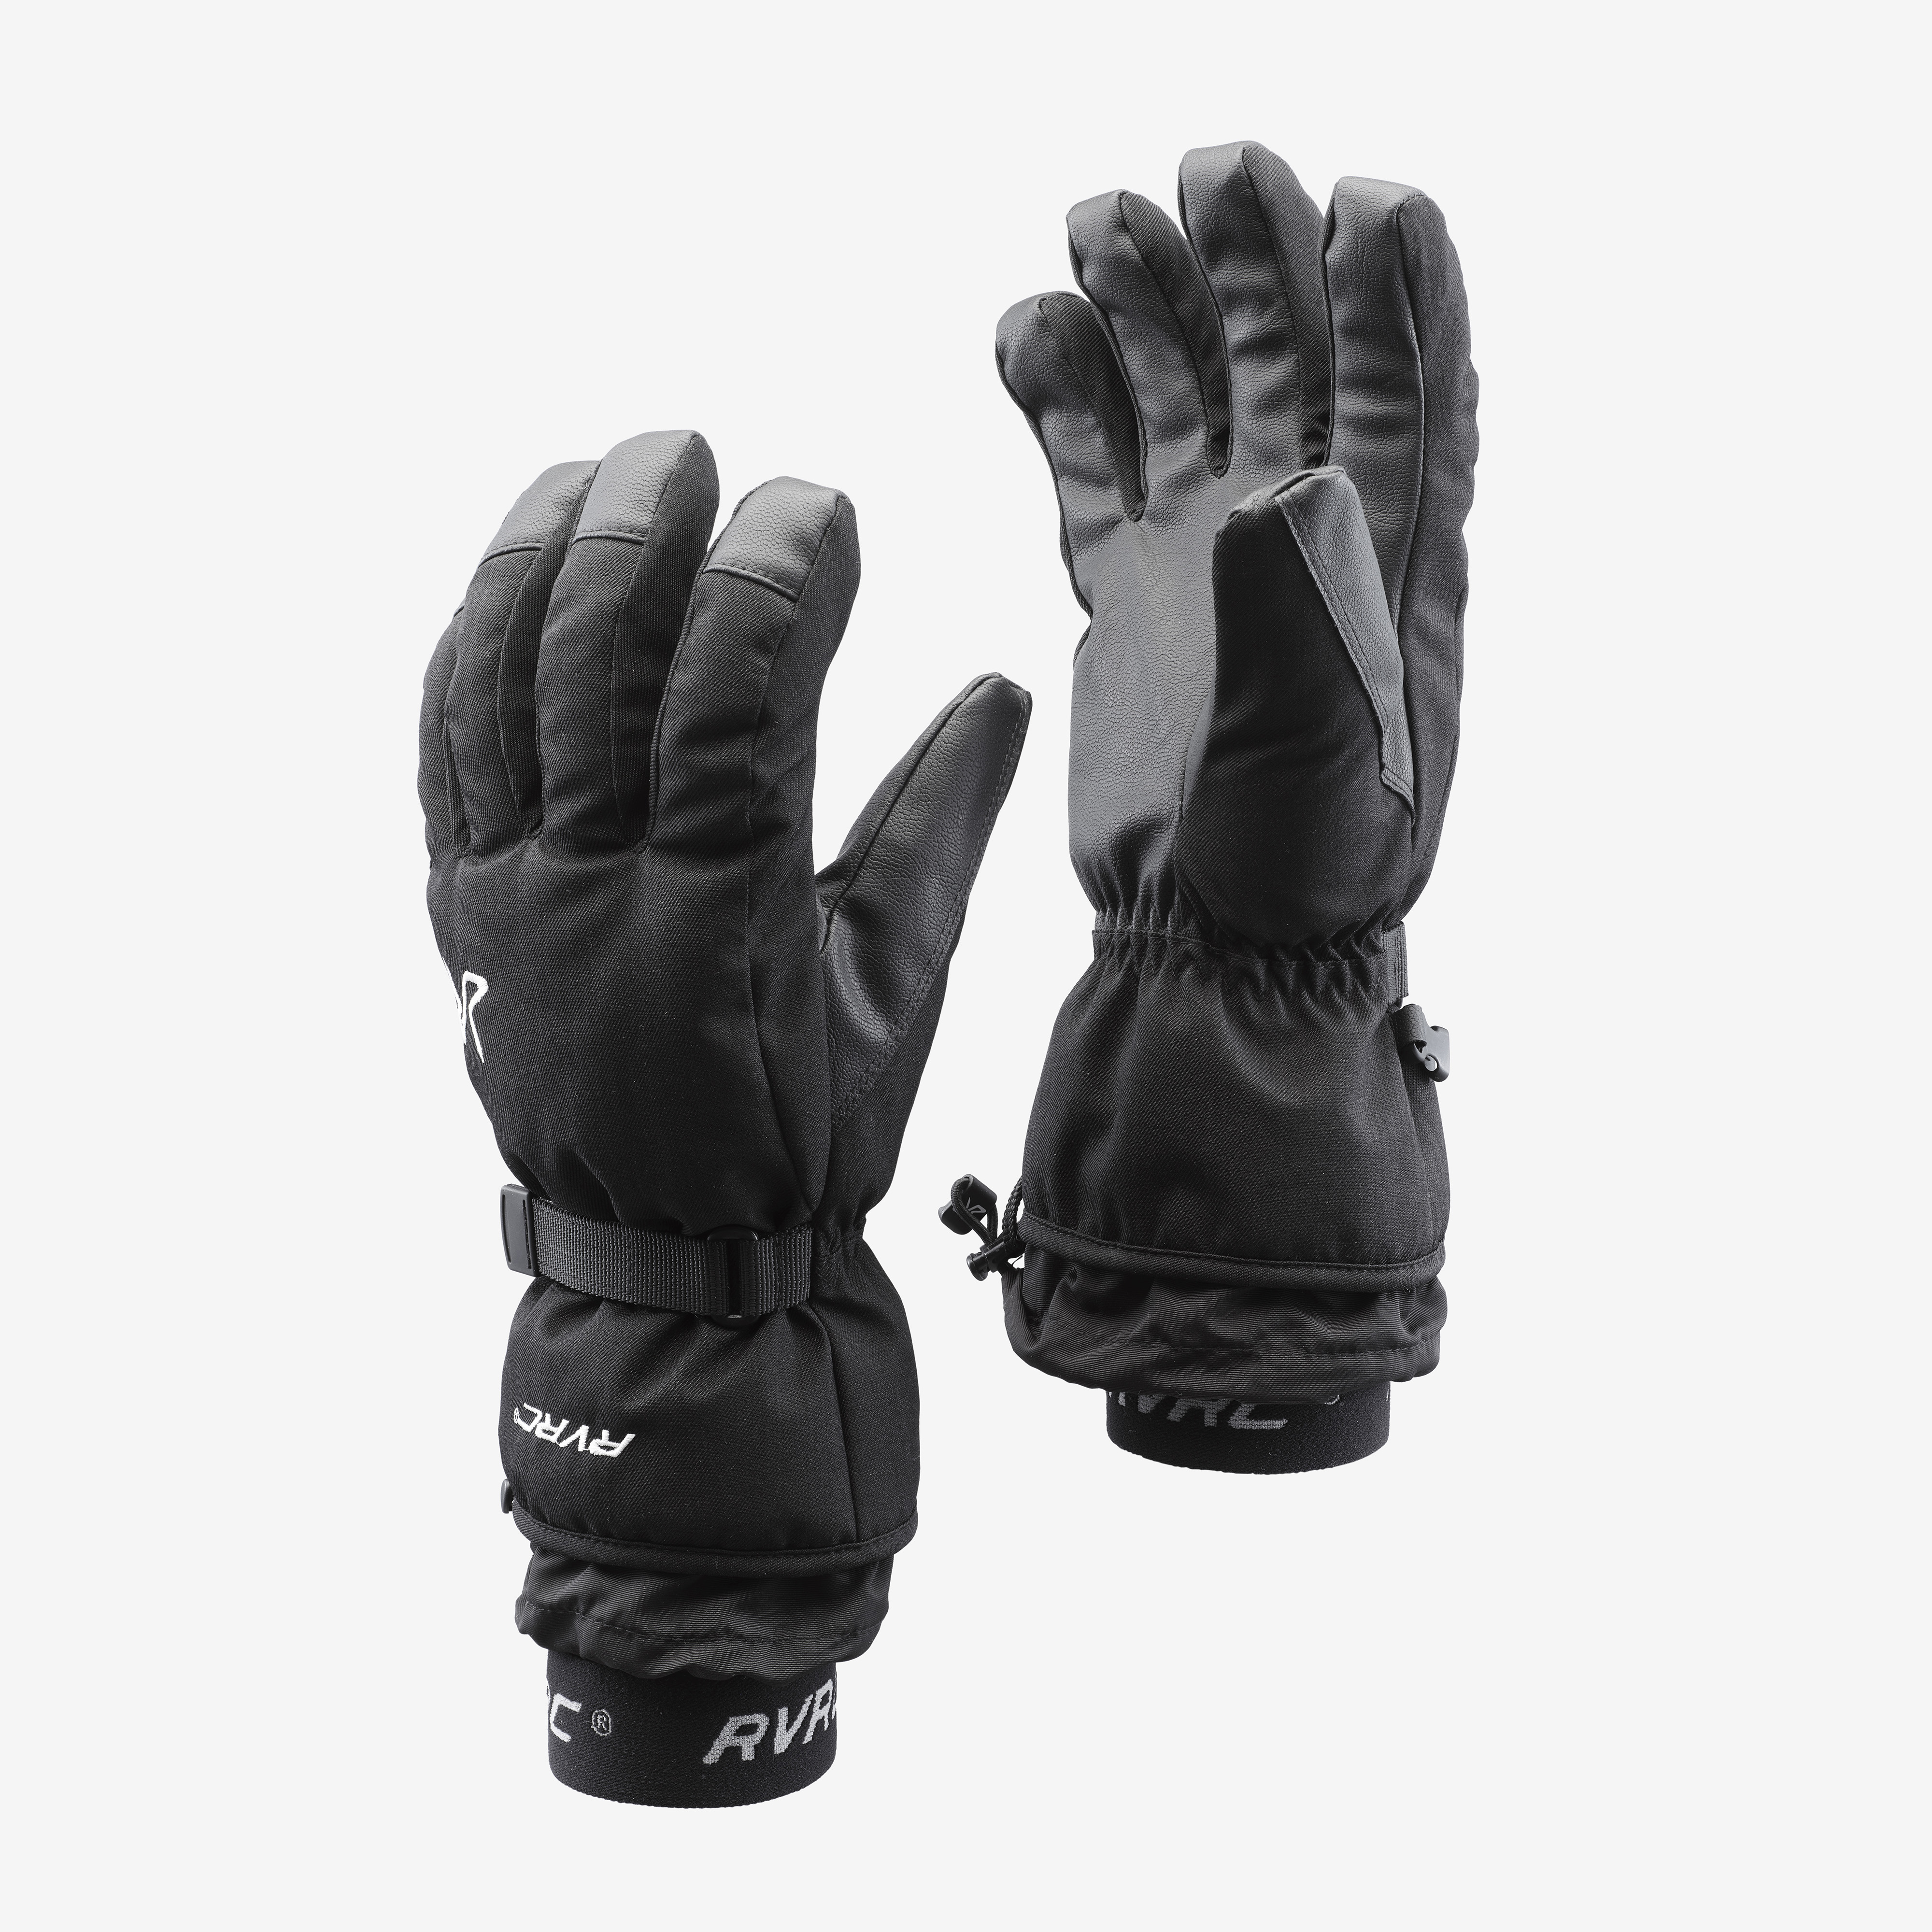 Cabin Ski Glove Unisex Black, Storlek:G10 - Accessoarer > Handskar